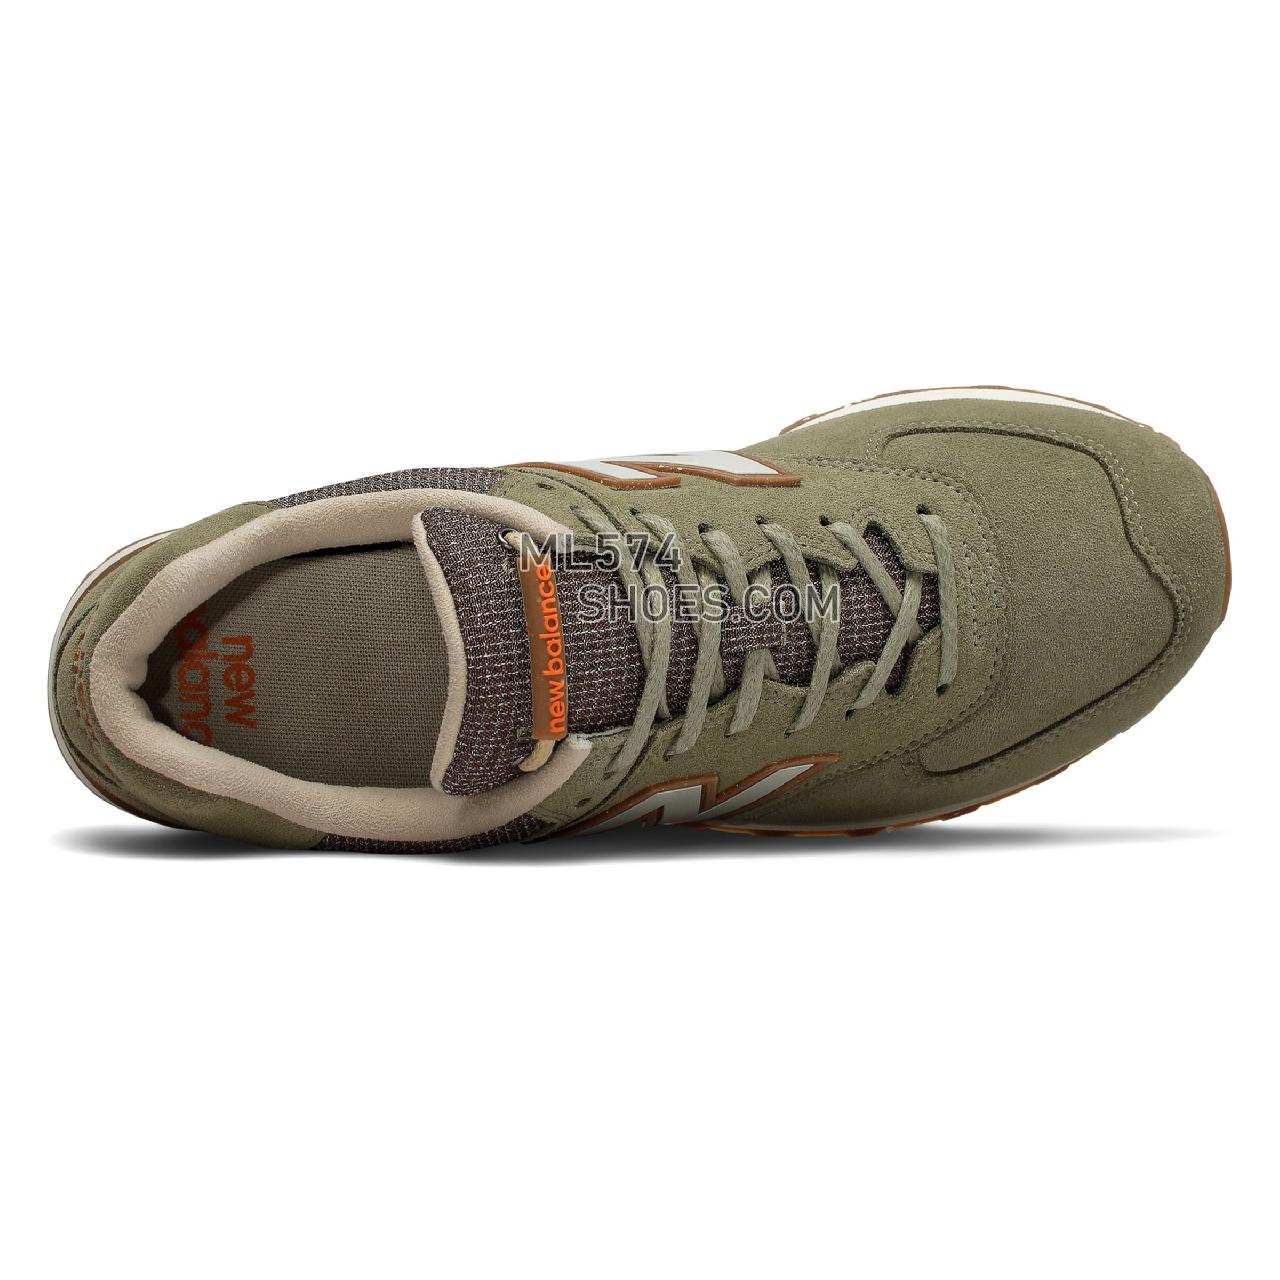 New Balance 574 Premium Outdoors - Men's Classic Sneakers - Covert Green with Turtle Dove - ML574SOJ